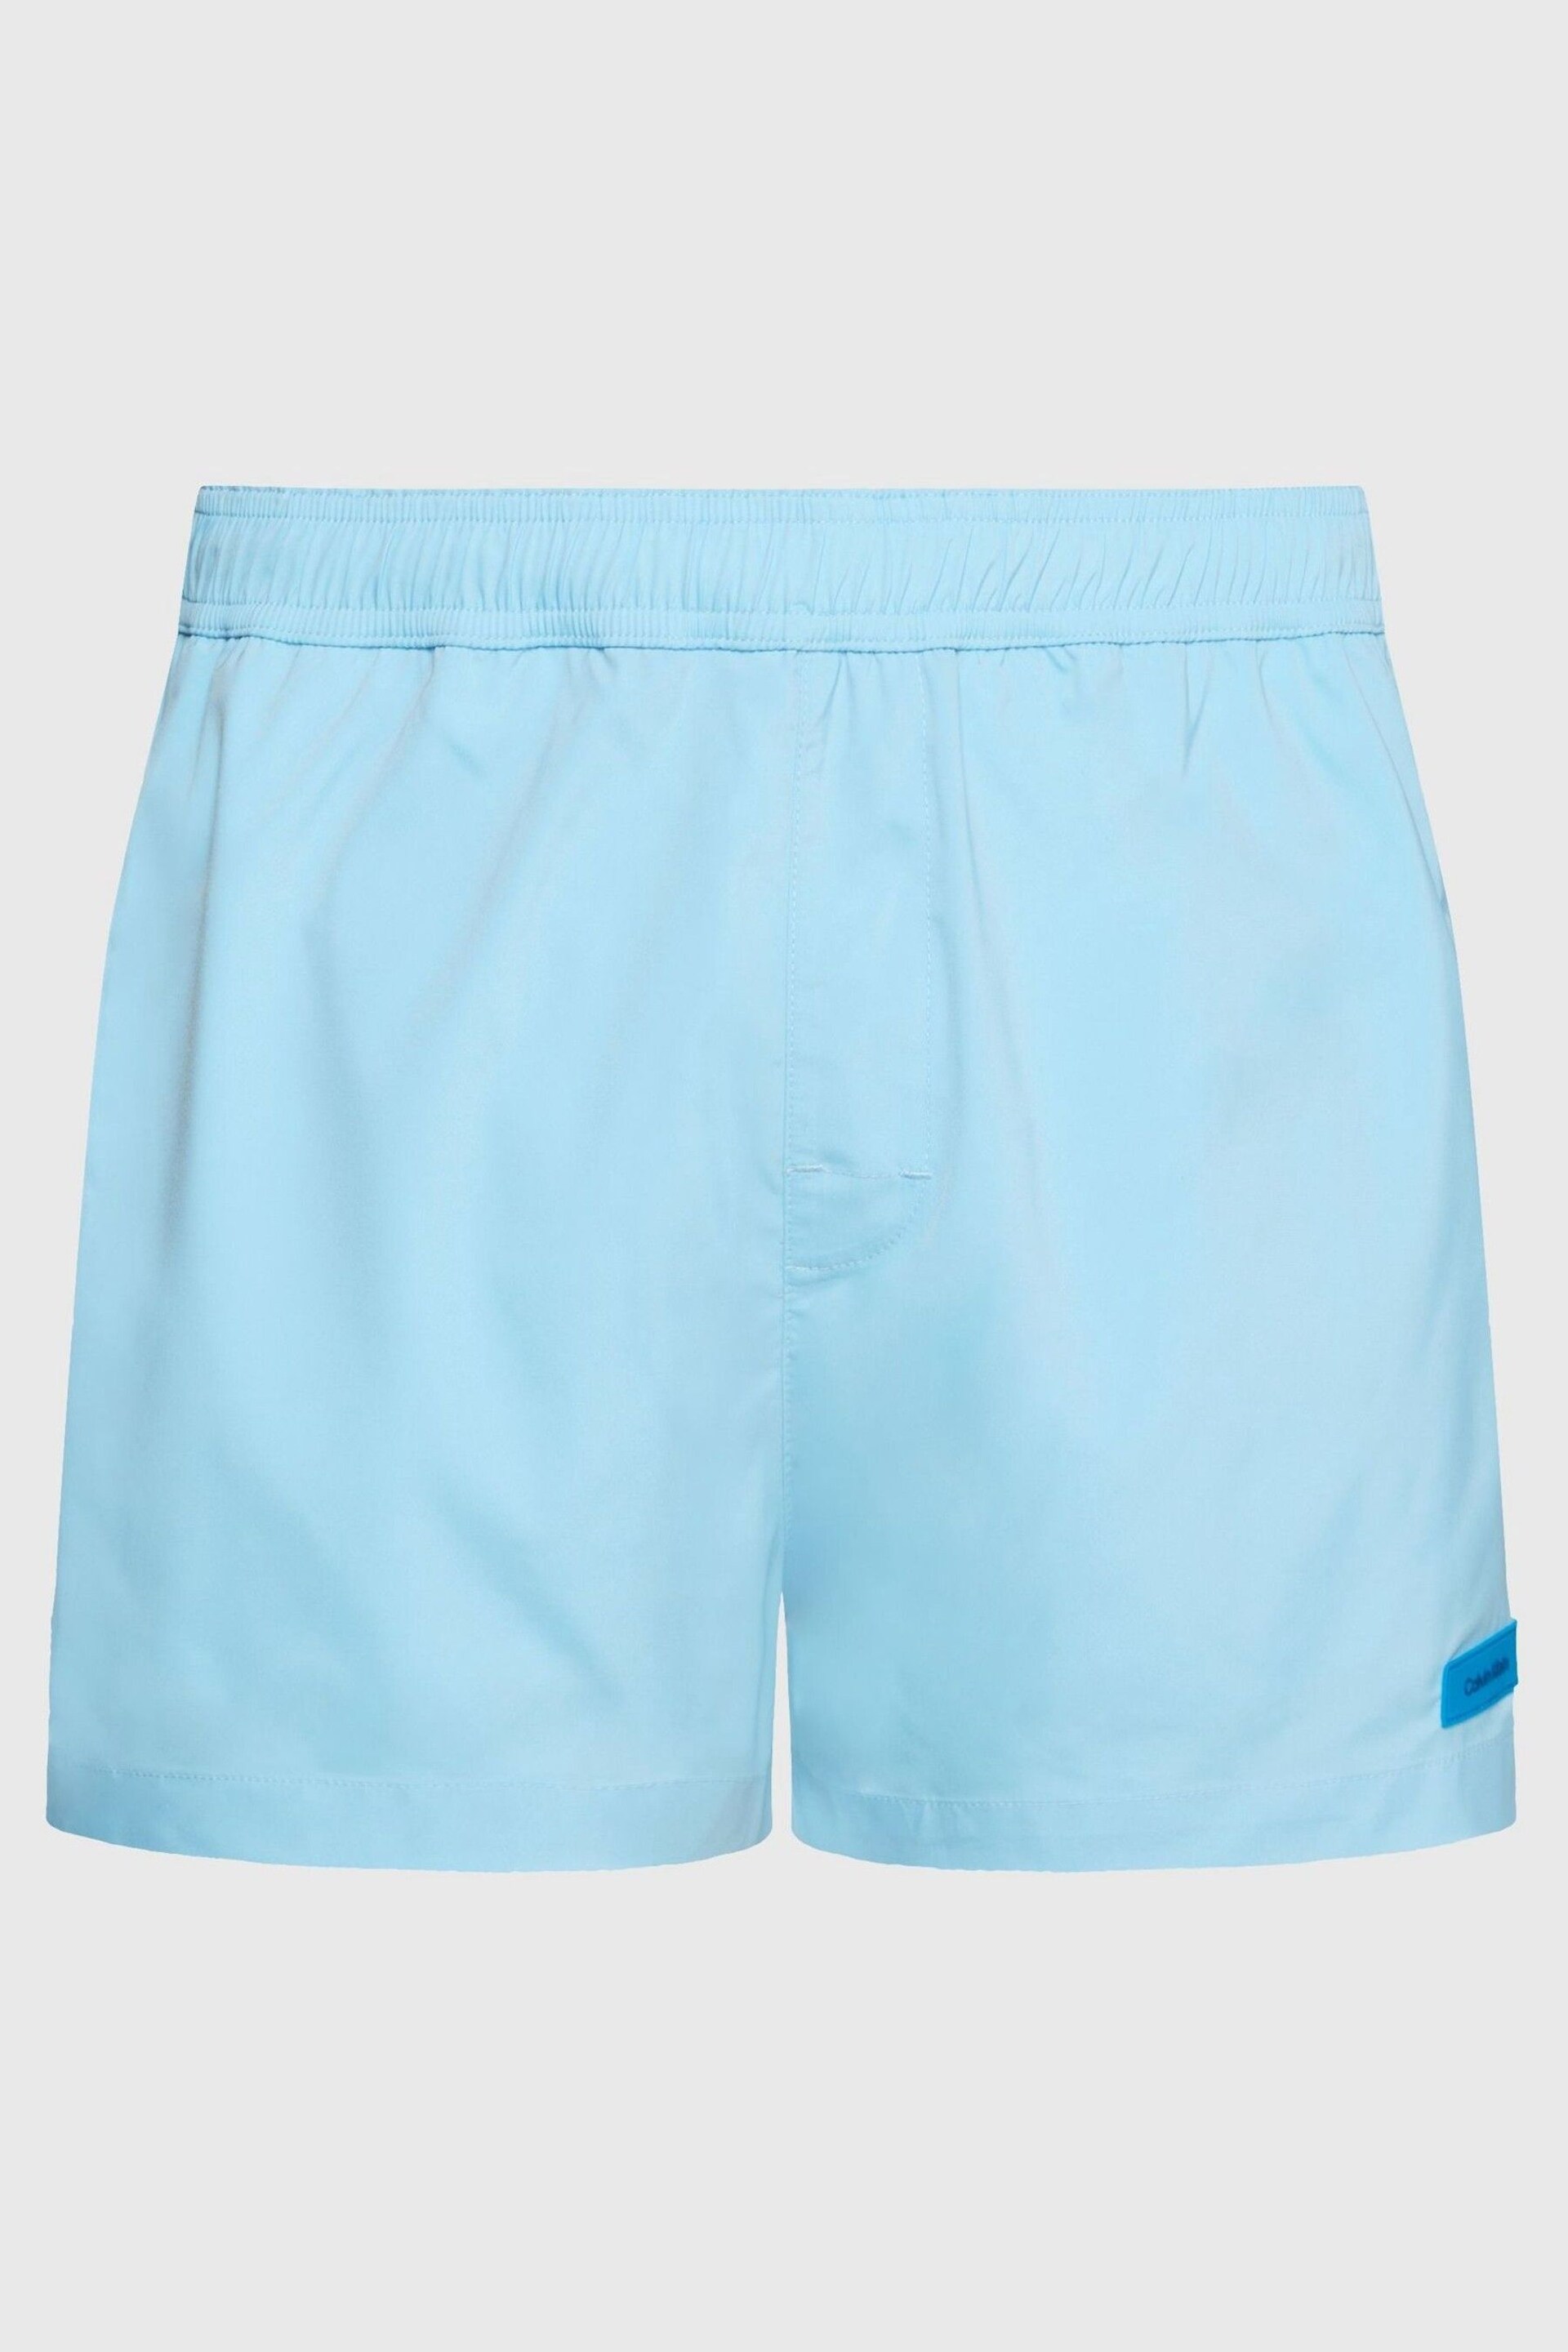 Calvin Klein Blue Plain Swim Shorts - Image 4 of 4